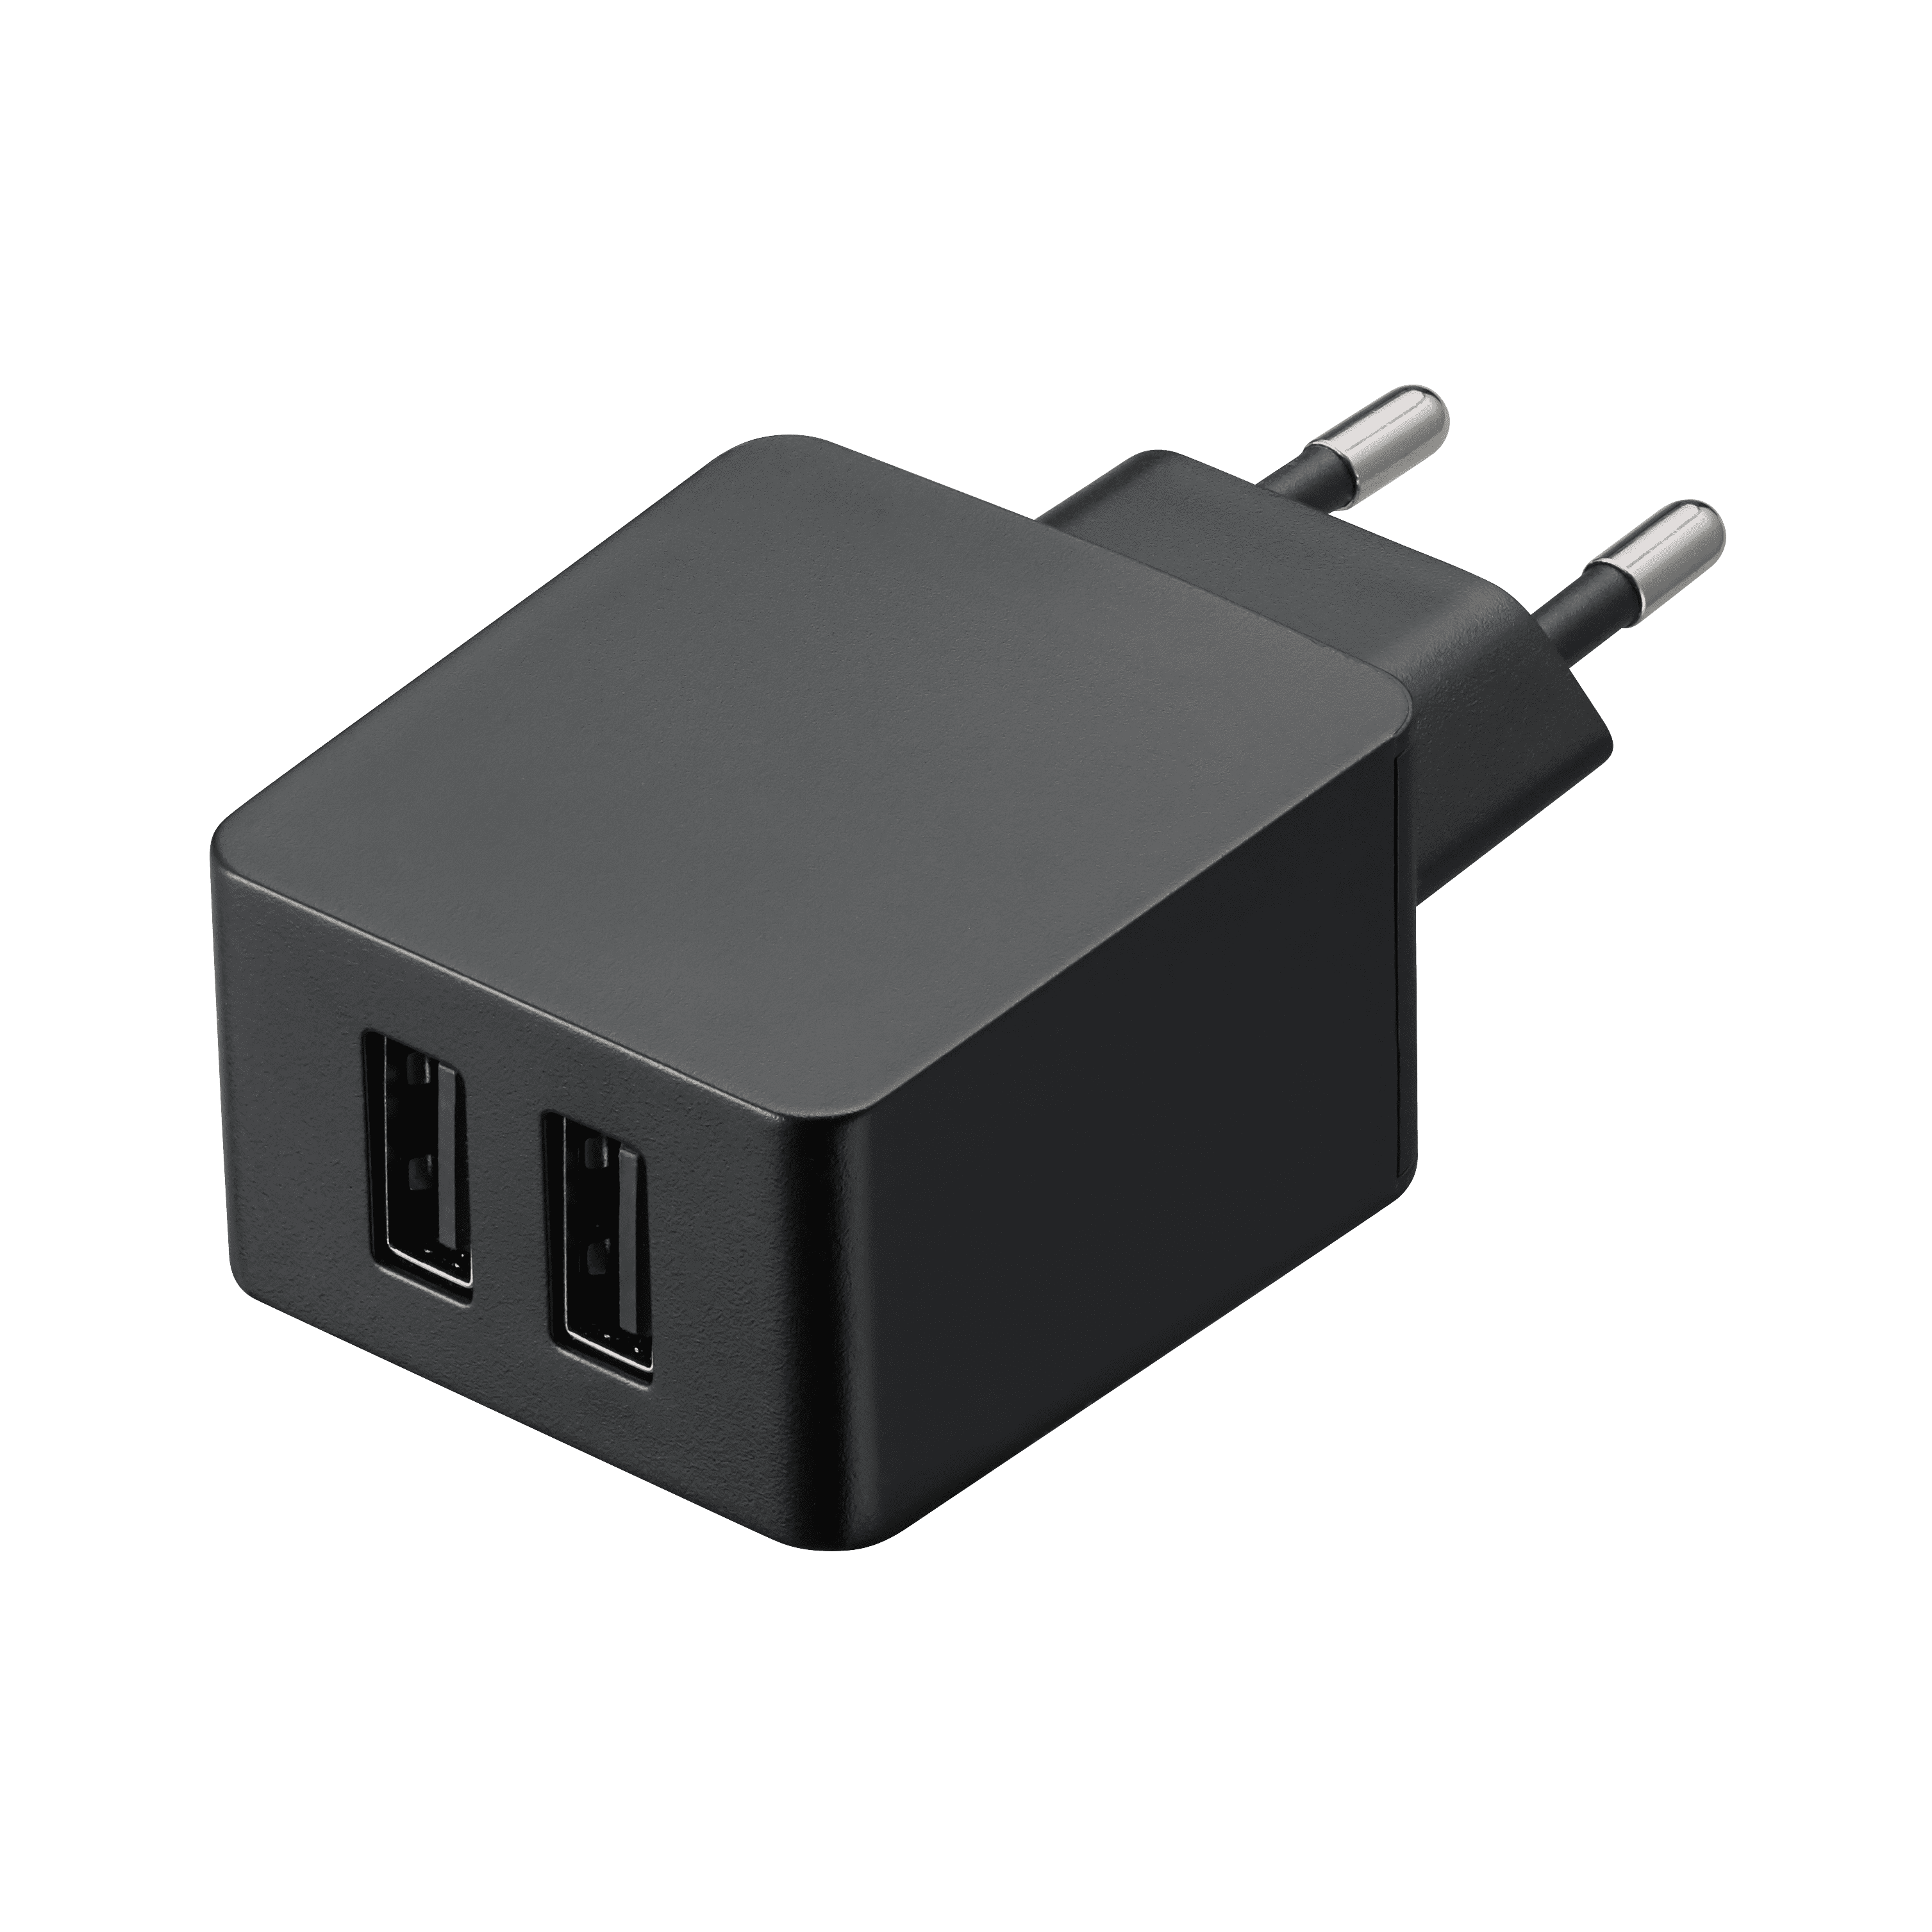 TA-227 Compact dual micro usb wall charger